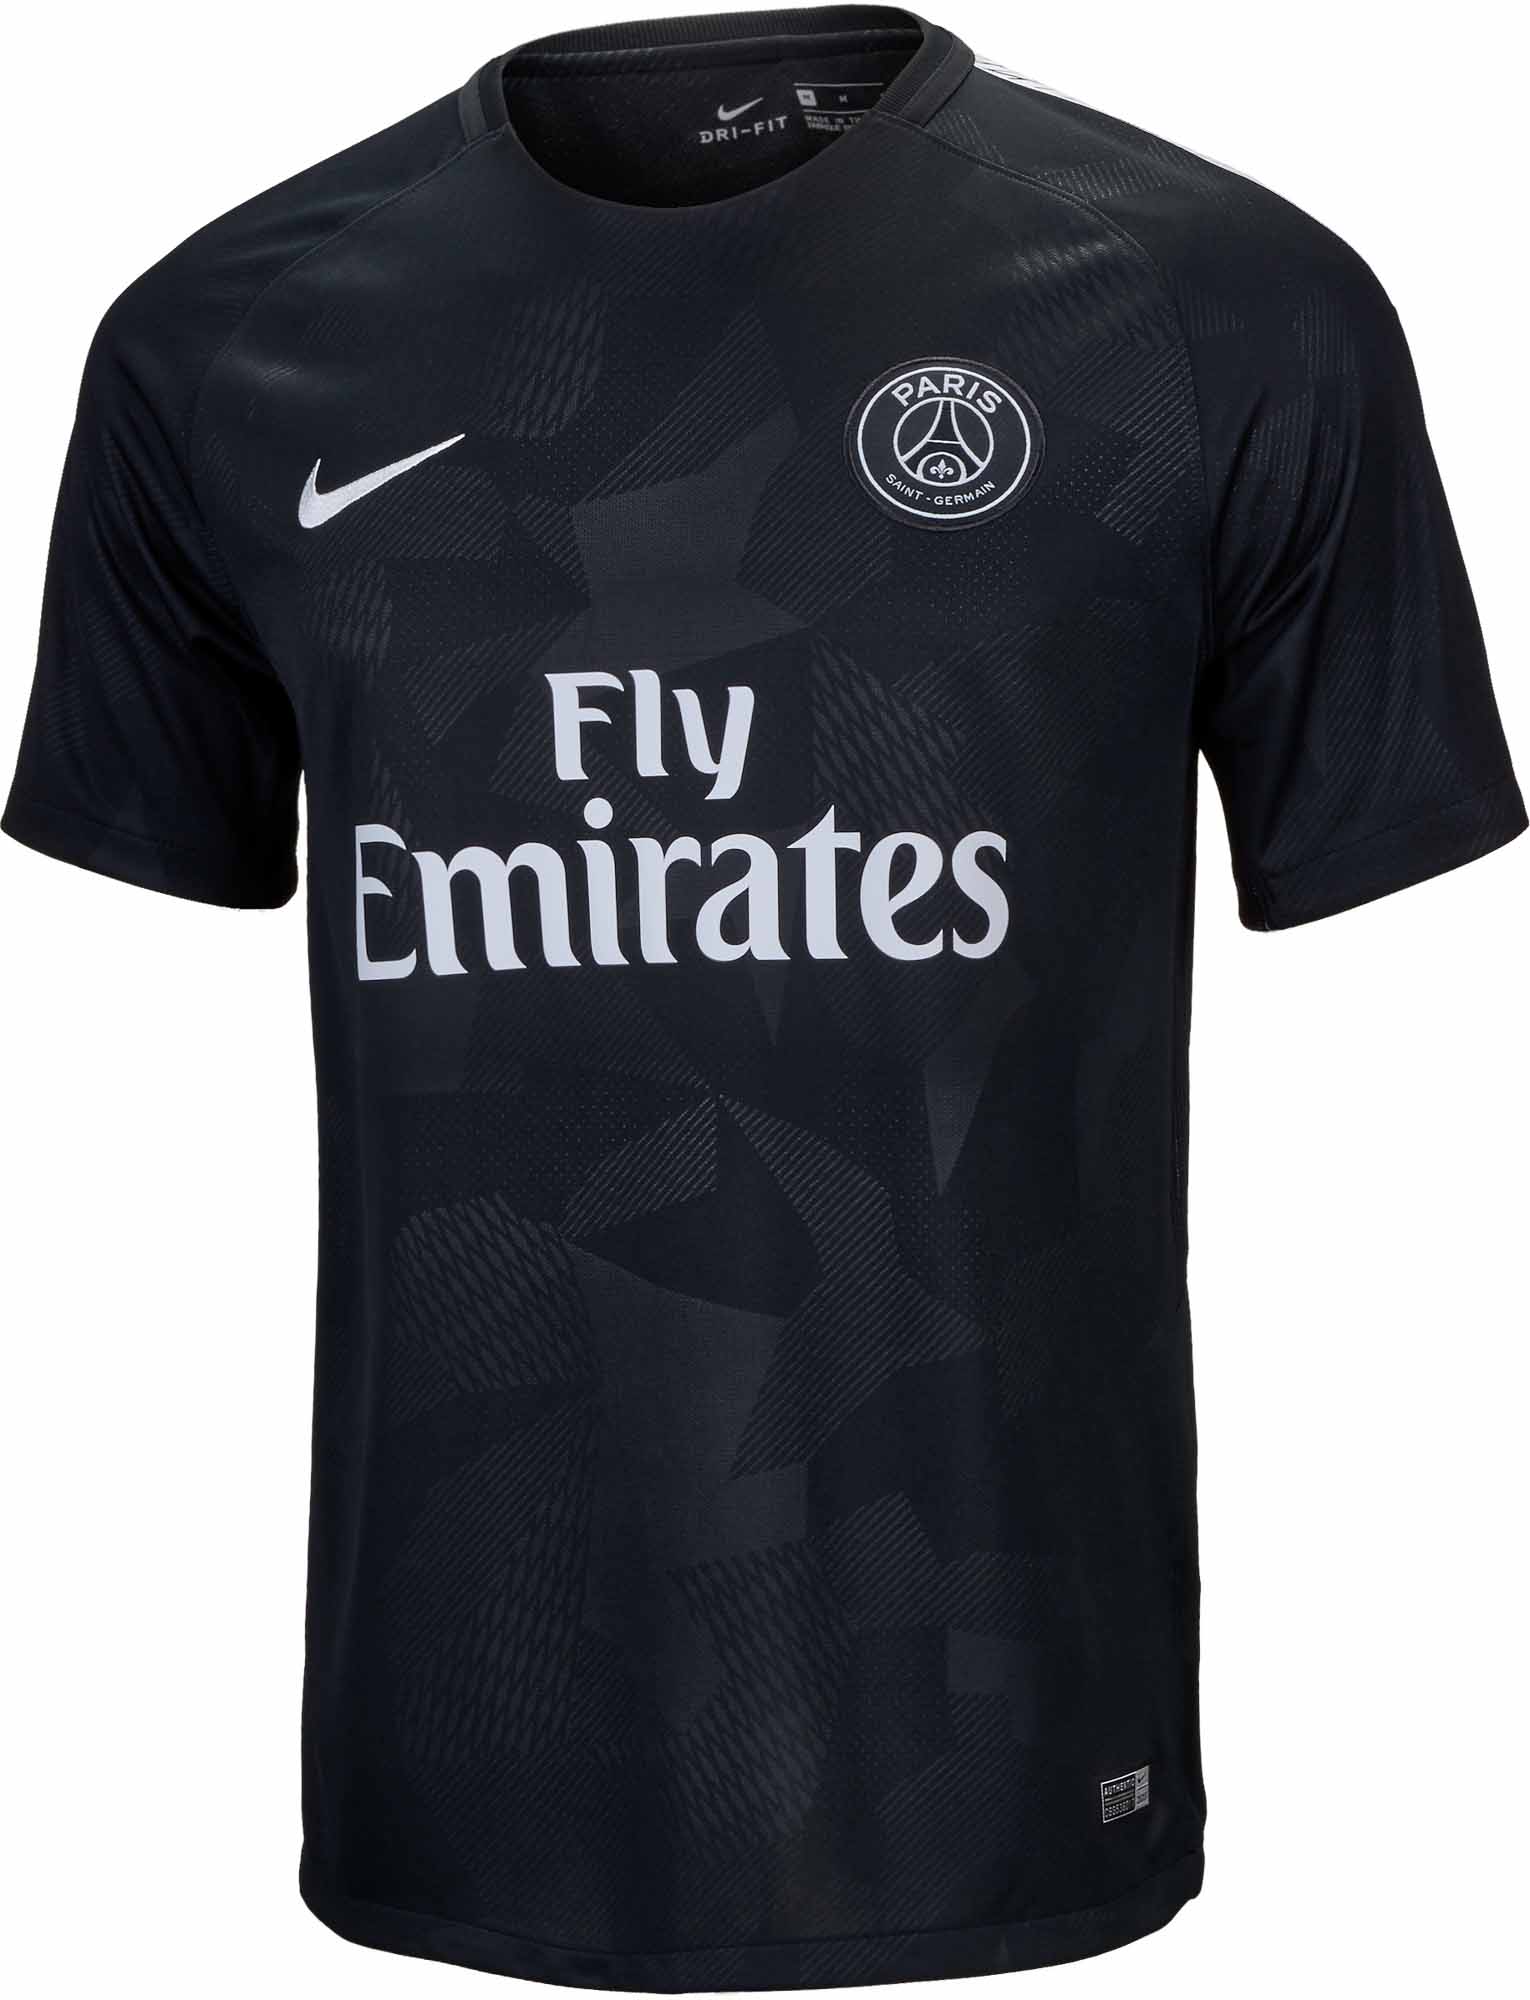 Nike Black Paris Saint-Germain Football Club Jersey